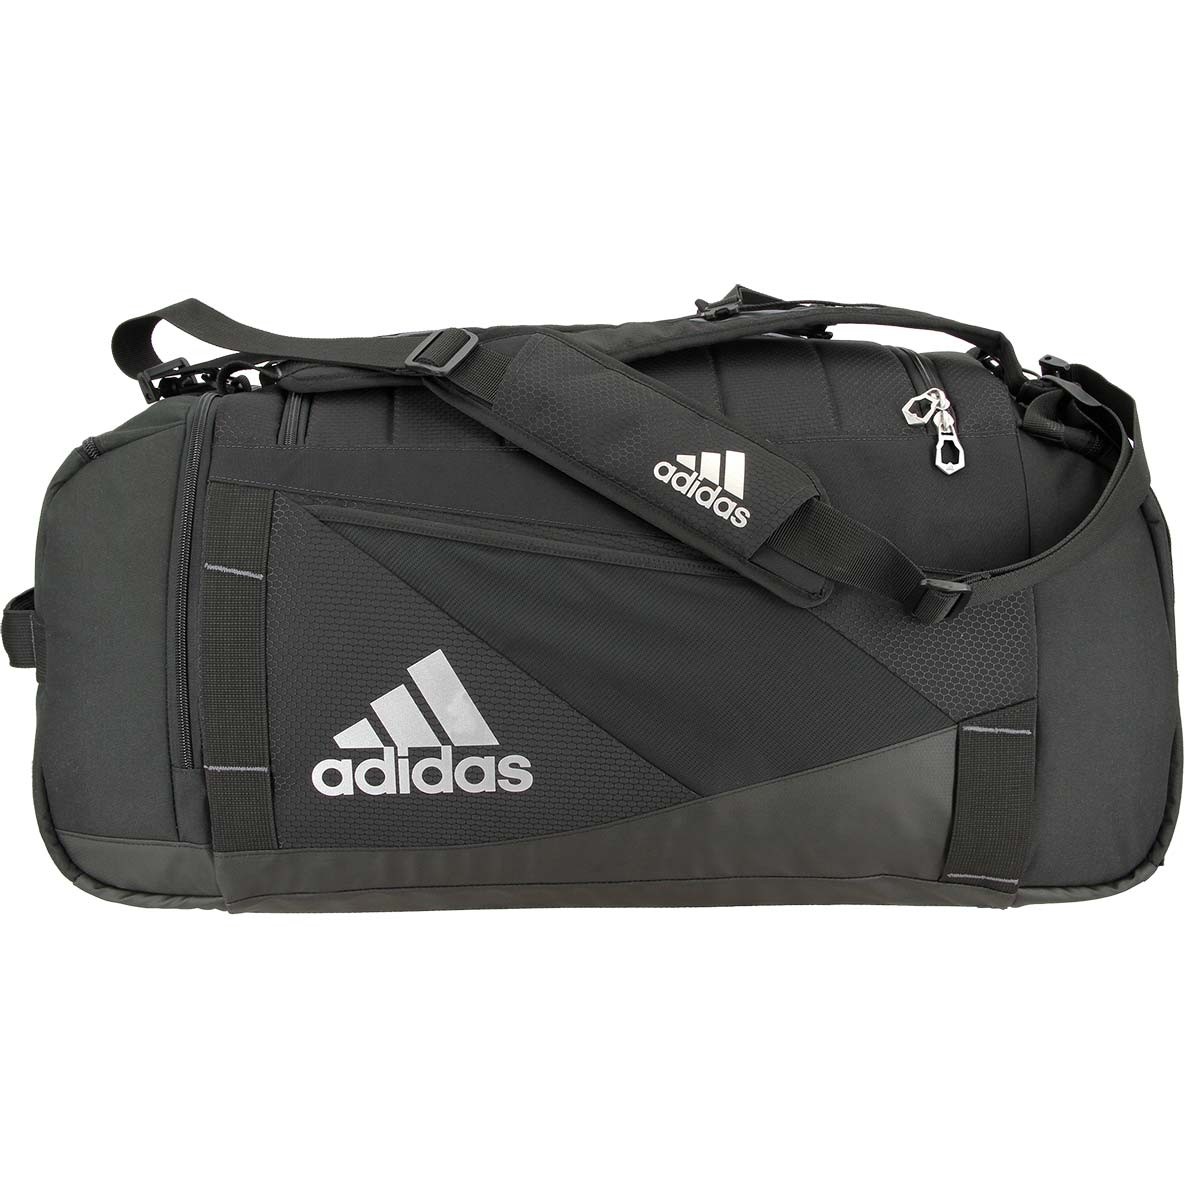 adidas unisex utility lacrosse backpack duffel